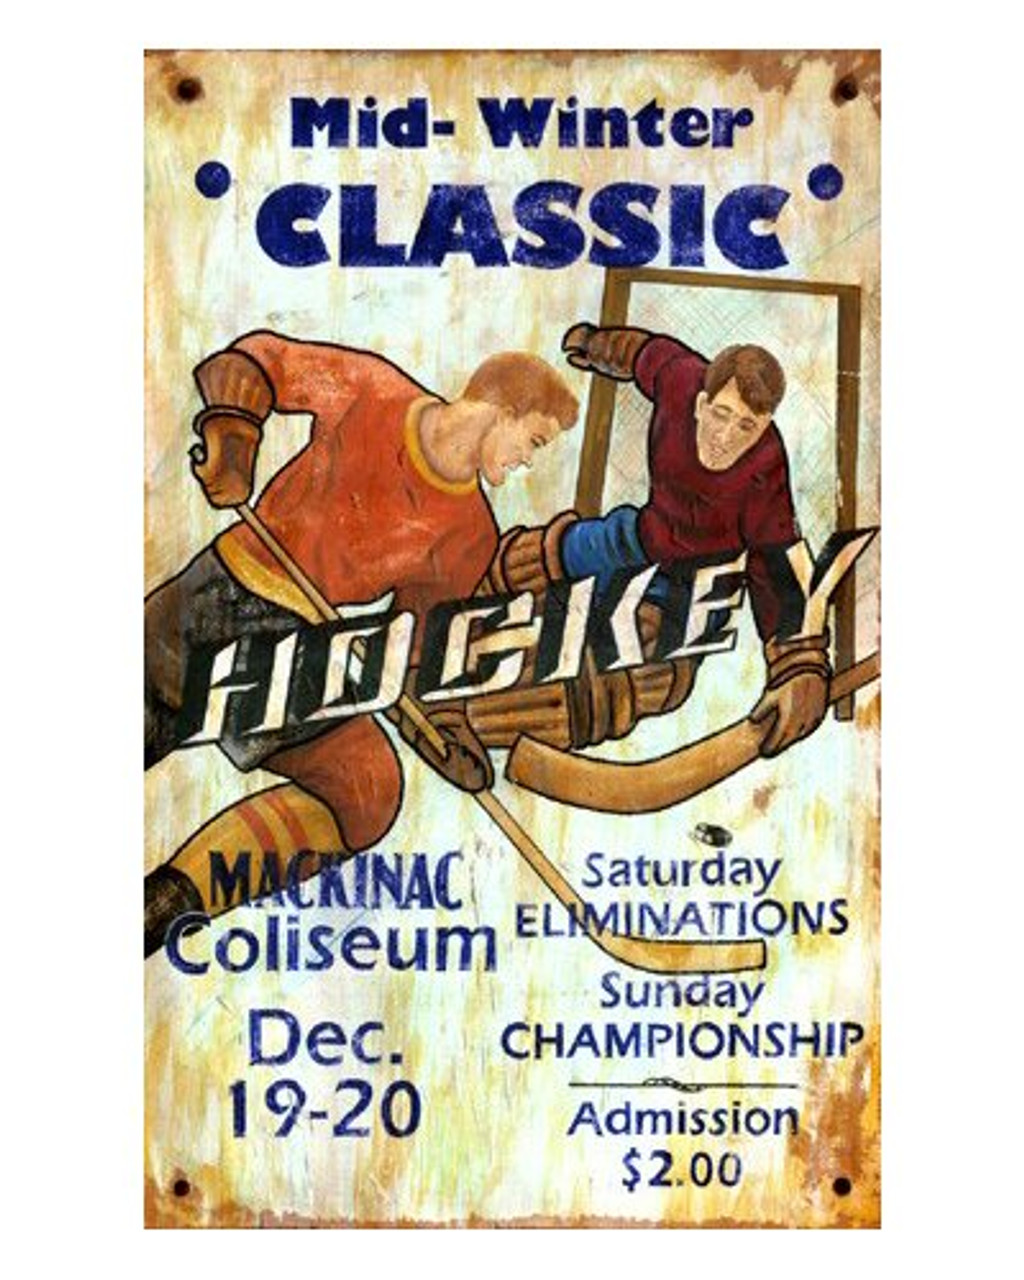 Vintage Inspired Hockey Print | Poster